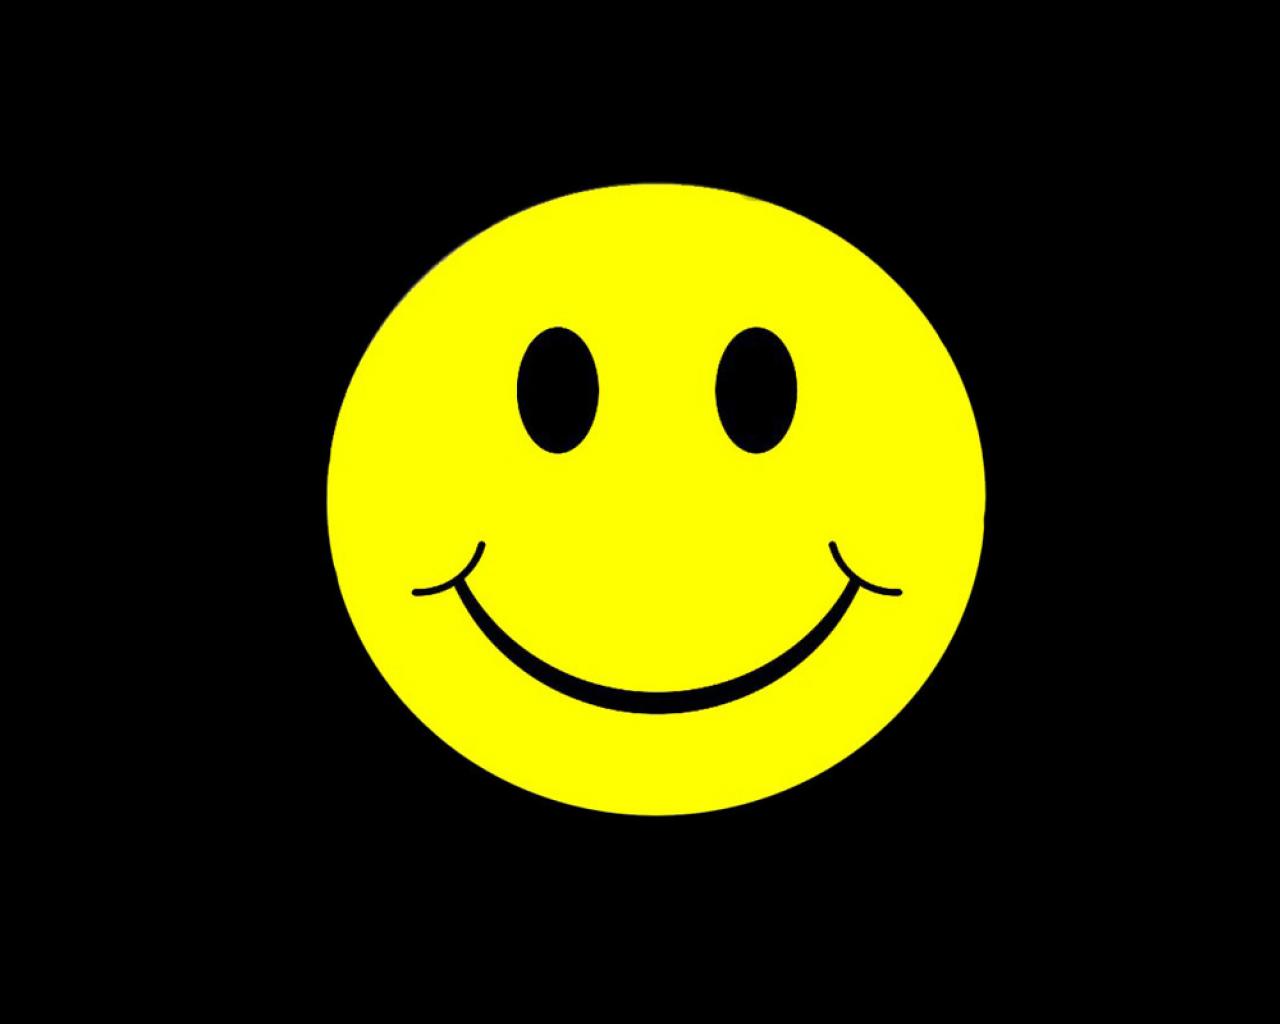 happy smiley face faces black background acid house Q2CD 1280x1024